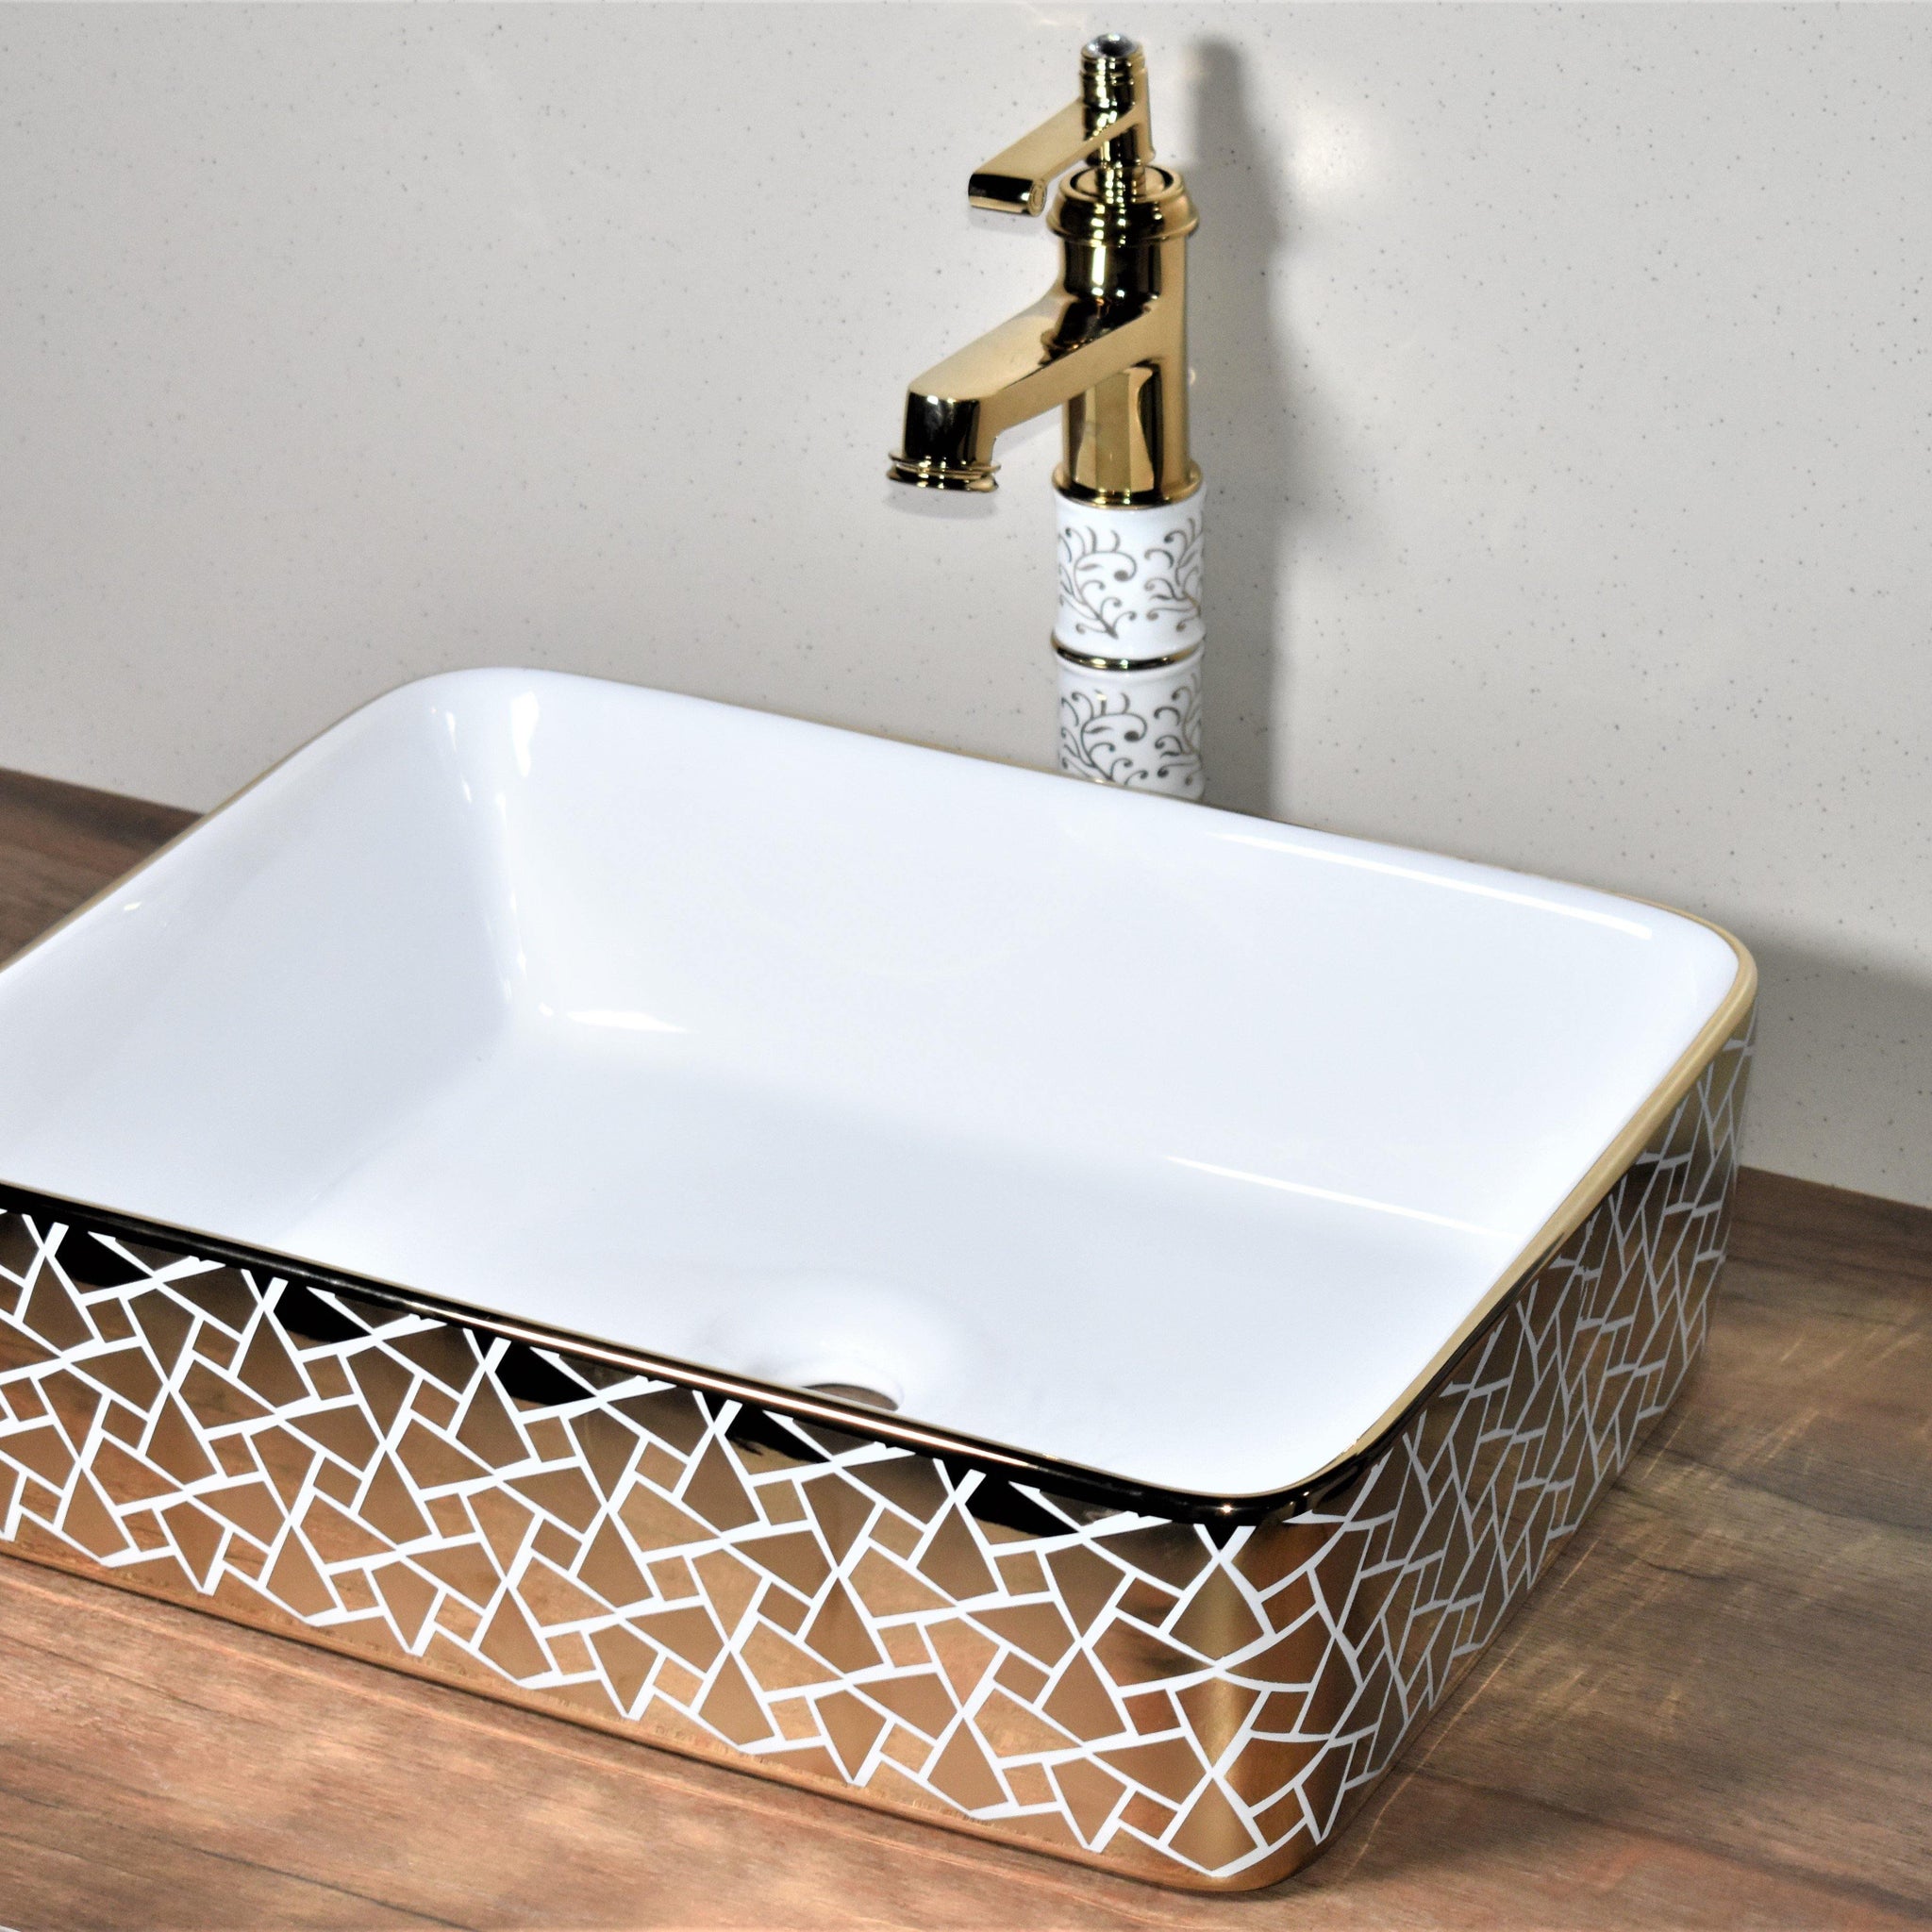 Ceramic Premium Designer Table Top Over Counter Vessel Sink Wash Basin for Bathroom 19 X 15 X 5.5 Inch Gold White Basin For Bathroom - Bath Outlet